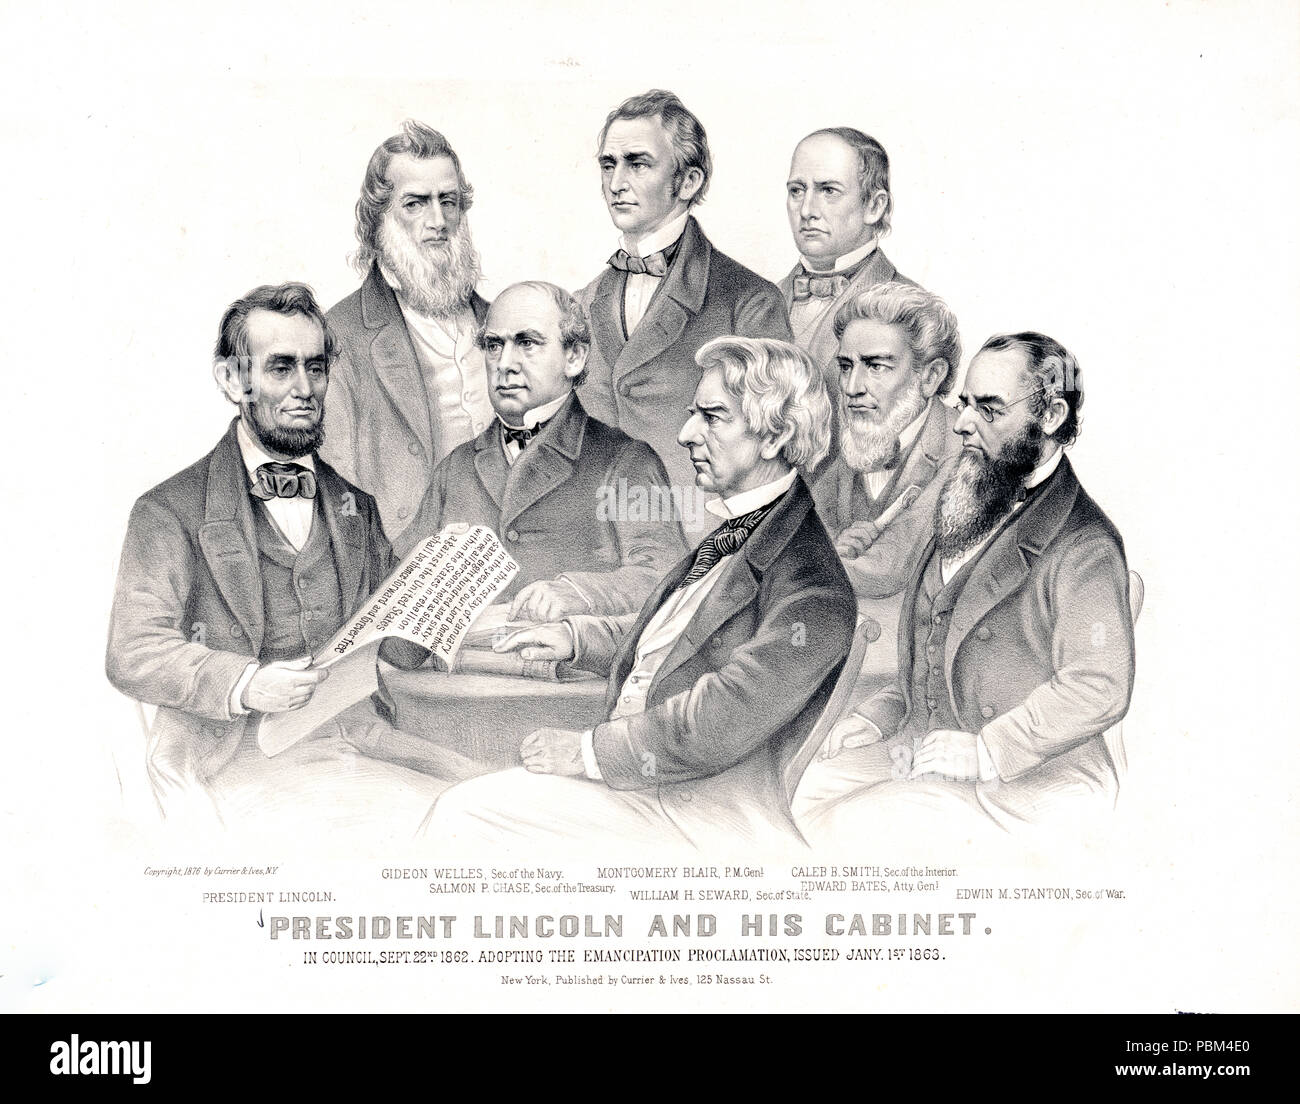 Präsident Lincoln und seinem Kabinett in Rat, Sept. 22 1862. Annahme der Emanzipations-proklamation, Jany. 1. 1863 Stockfoto